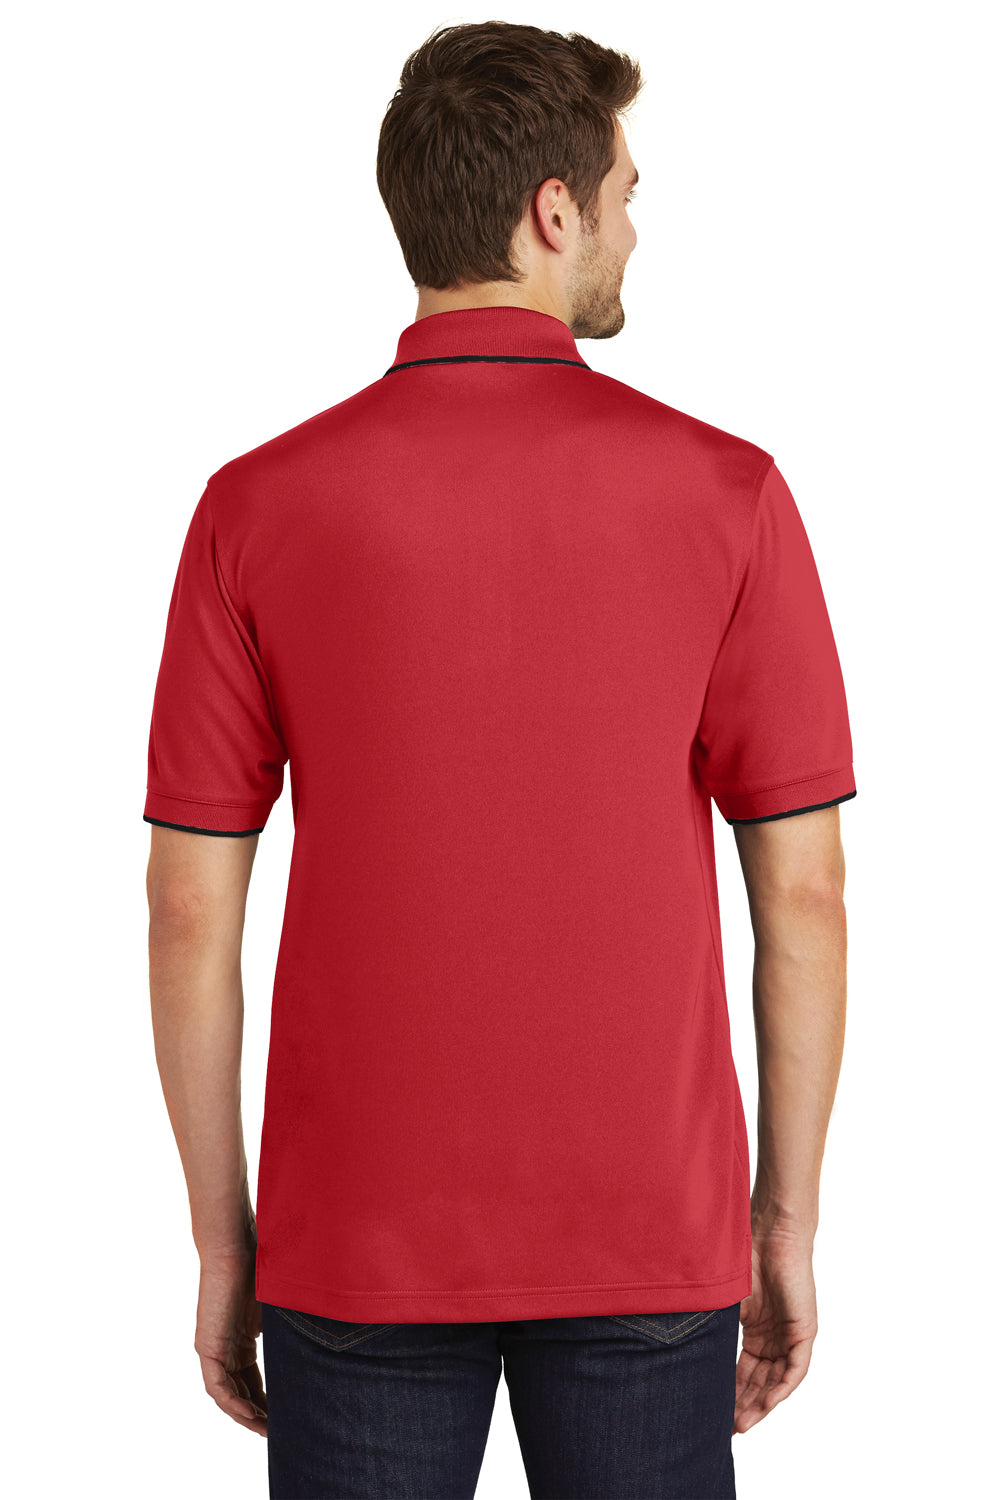 Port Authority K111 Mens Dry Zone Moisture Wicking Short Sleeve Polo Shirt Red/Black Back